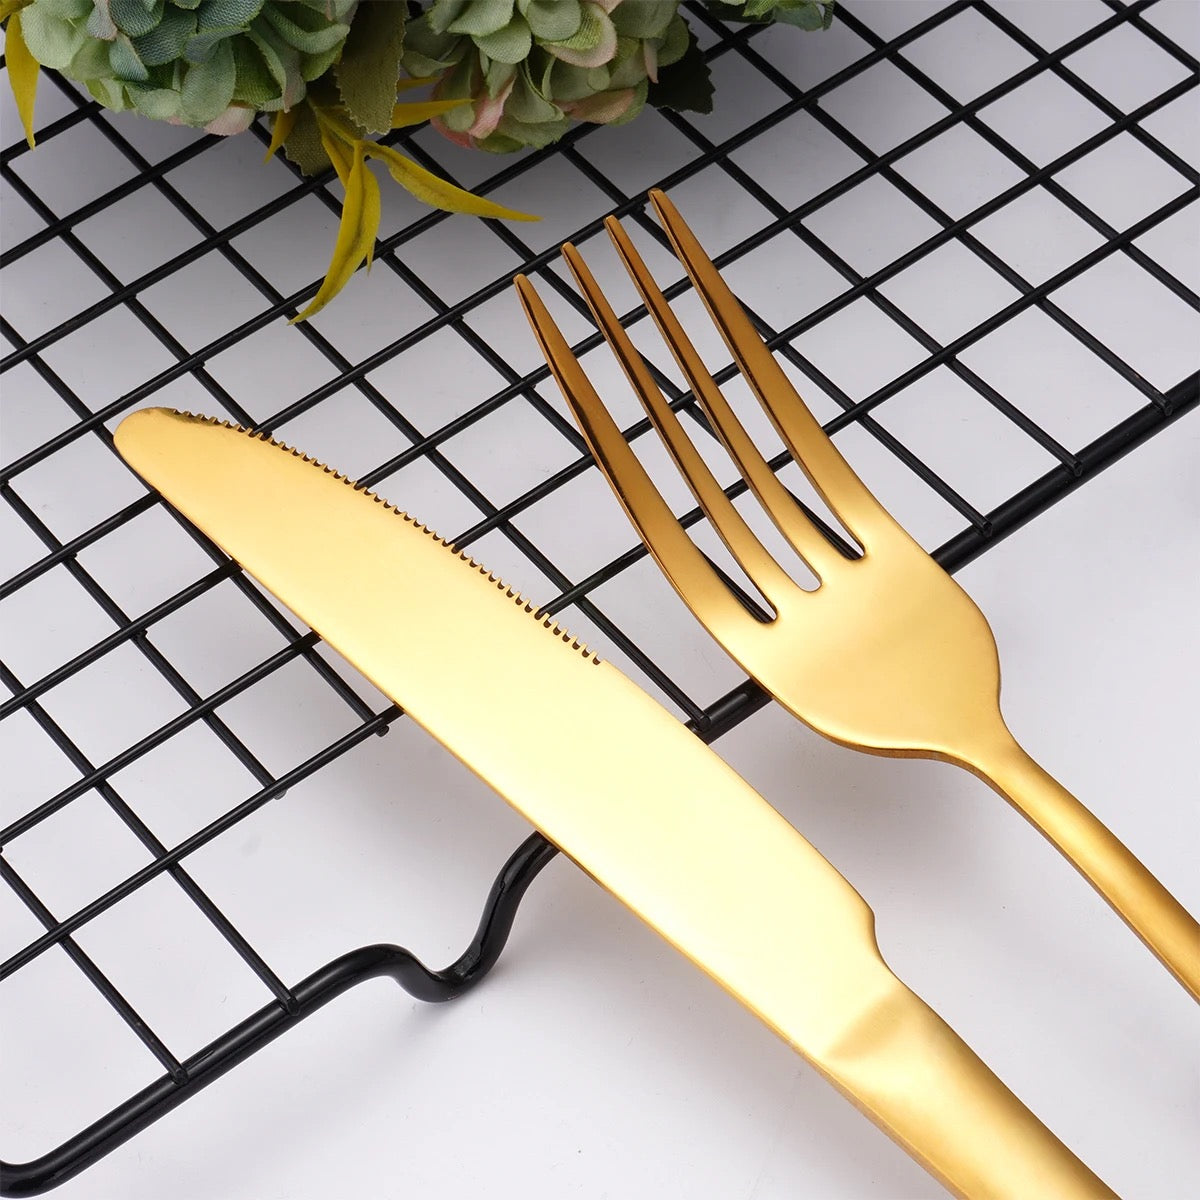 24-Piece Stainless Steel Cutlery Set - Luxurious Dining Essentials